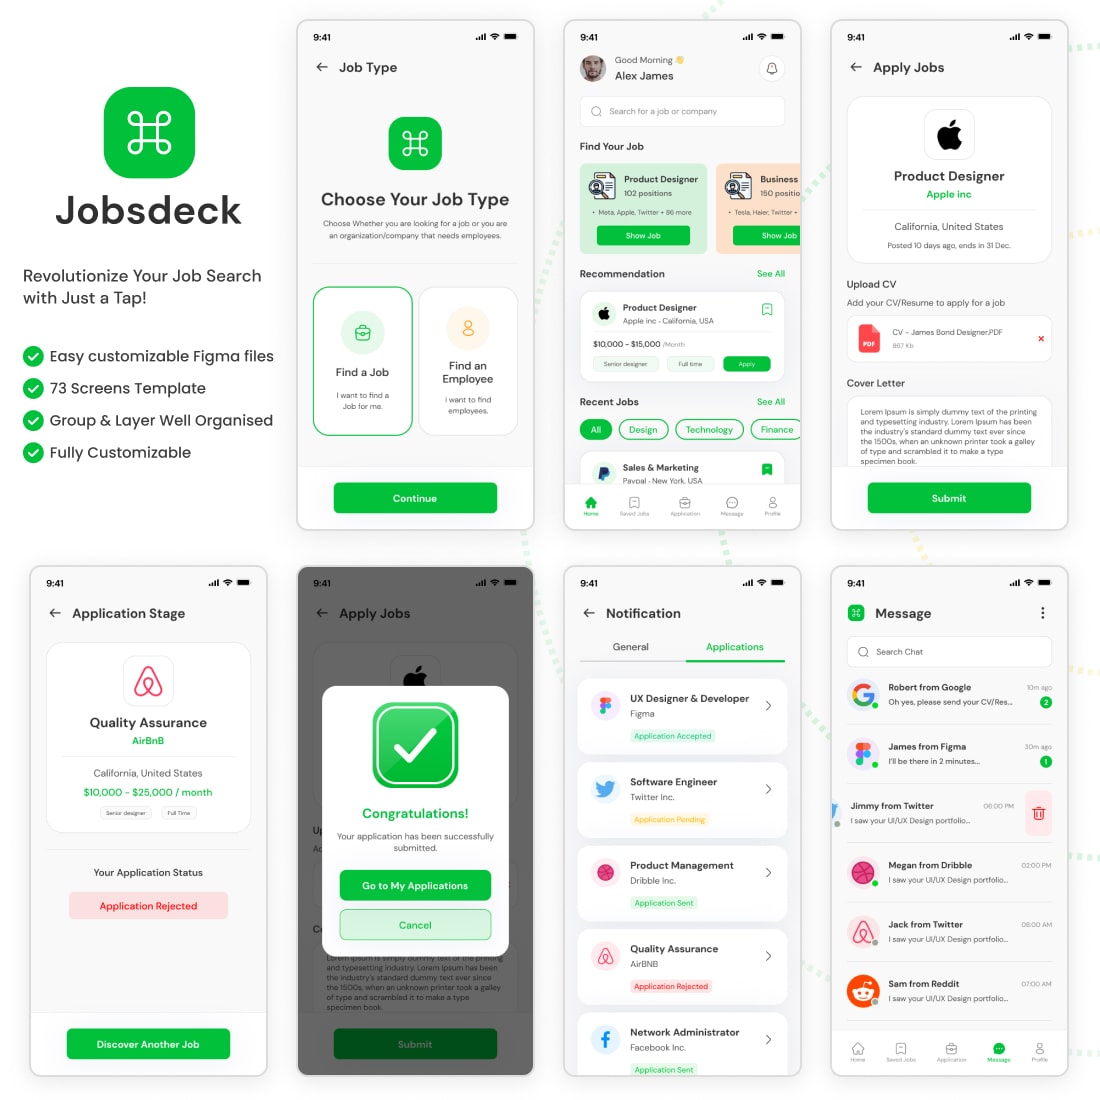 Jobsdeck - Job Finding Mobile App UI Kit Template cover image.